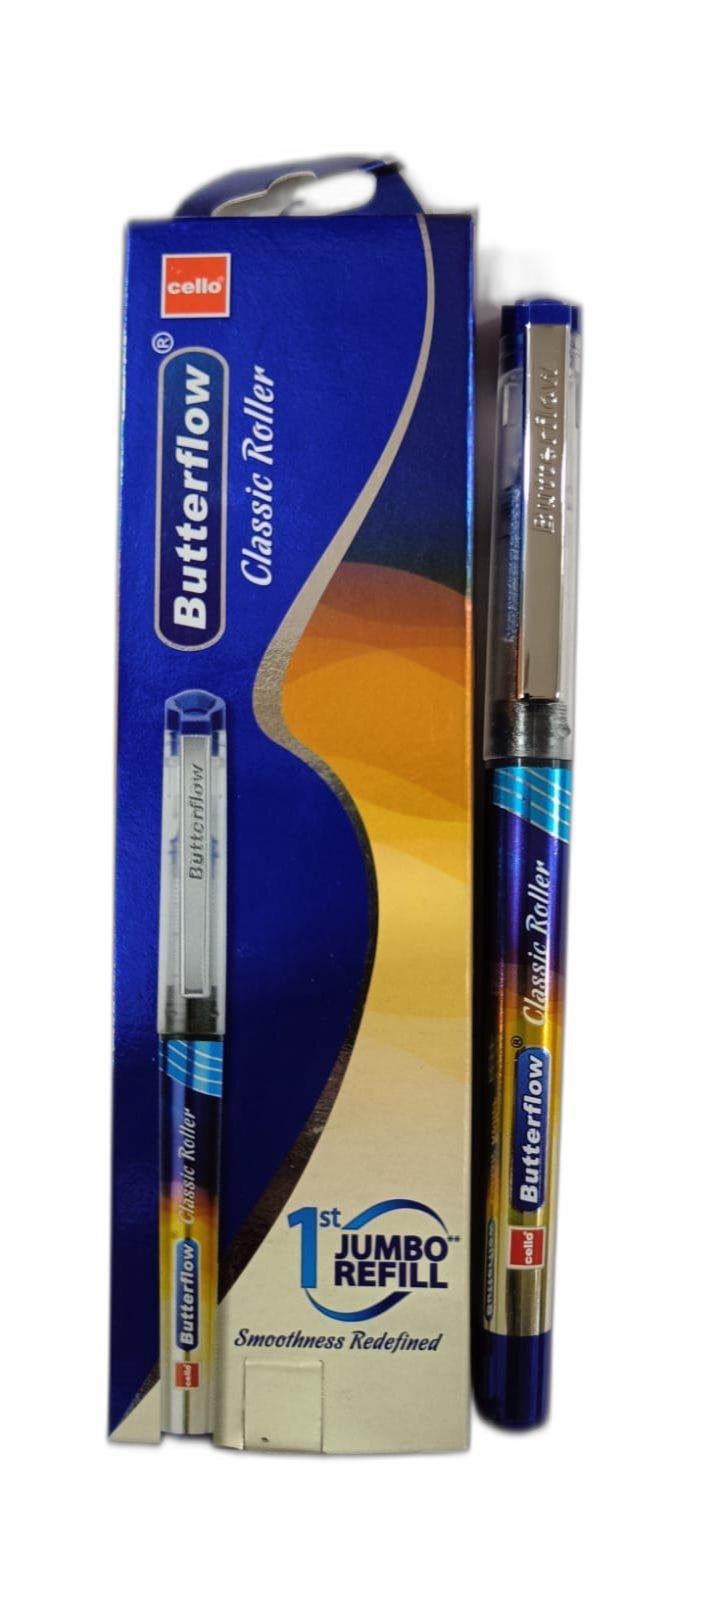 Cello ButterFlow Classic Roller Gel Pen